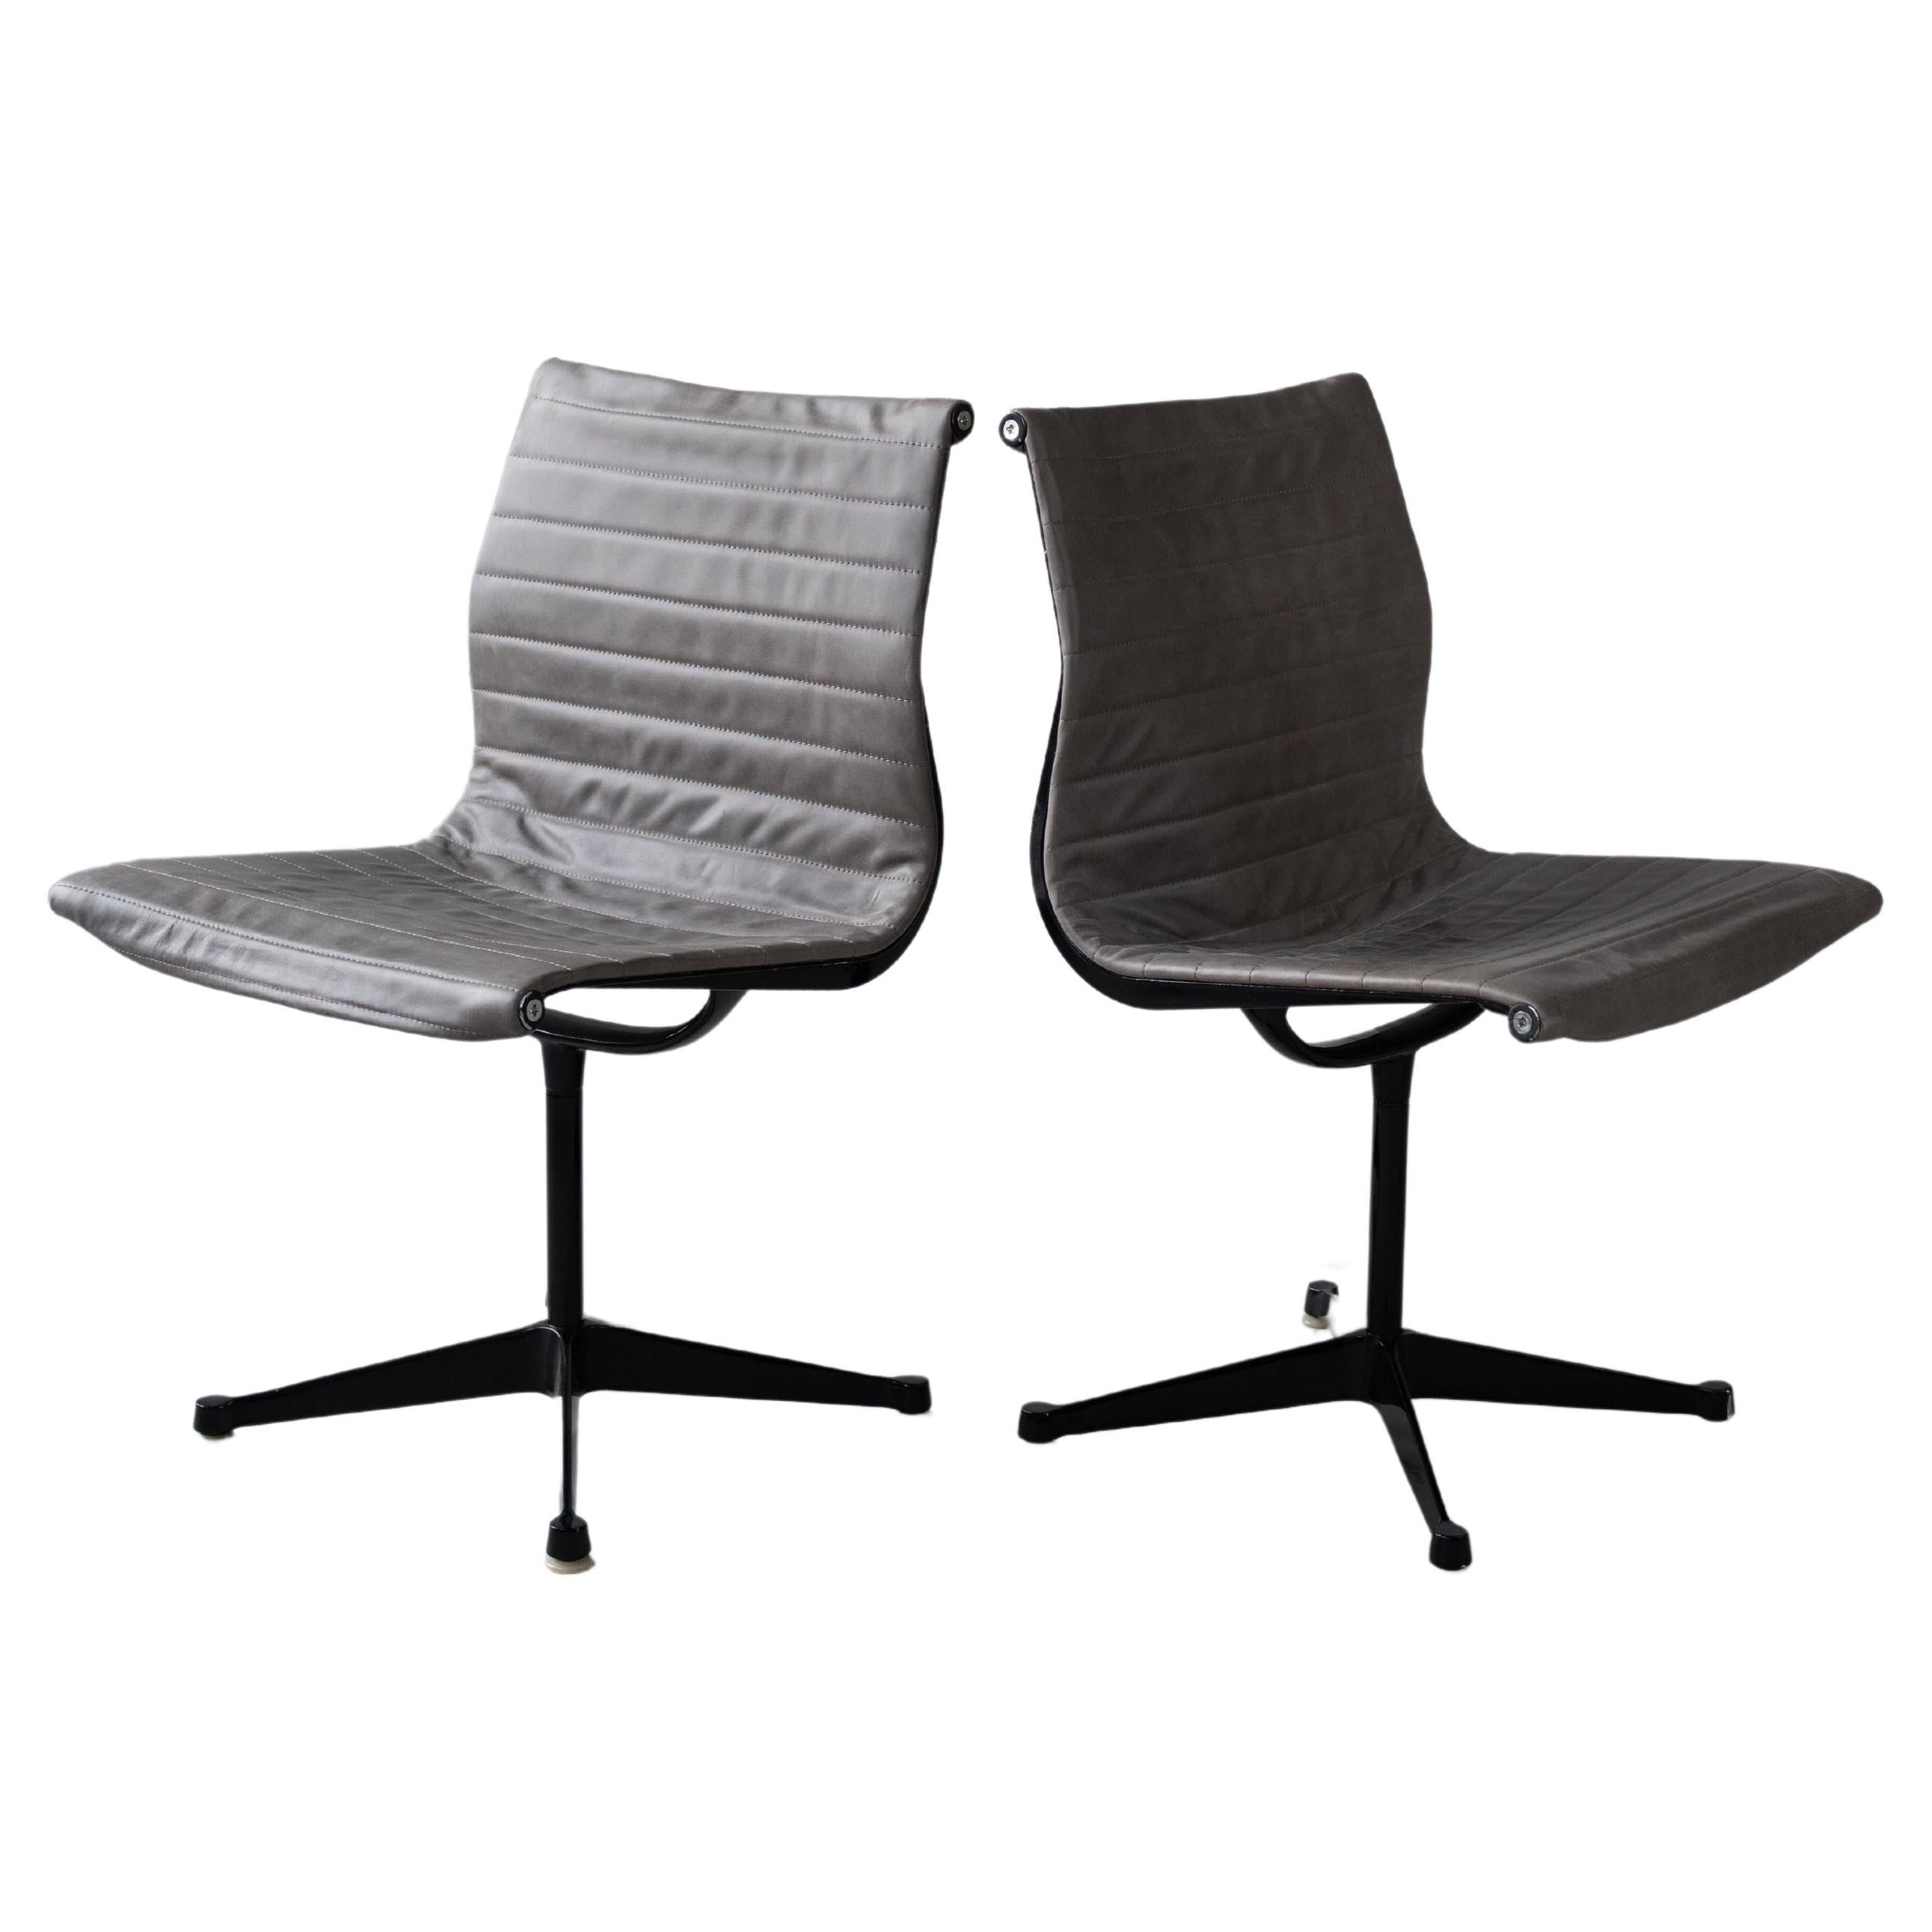 Chaise en aluminium de Charles and Ray Eames, ensemble de 2 chaises